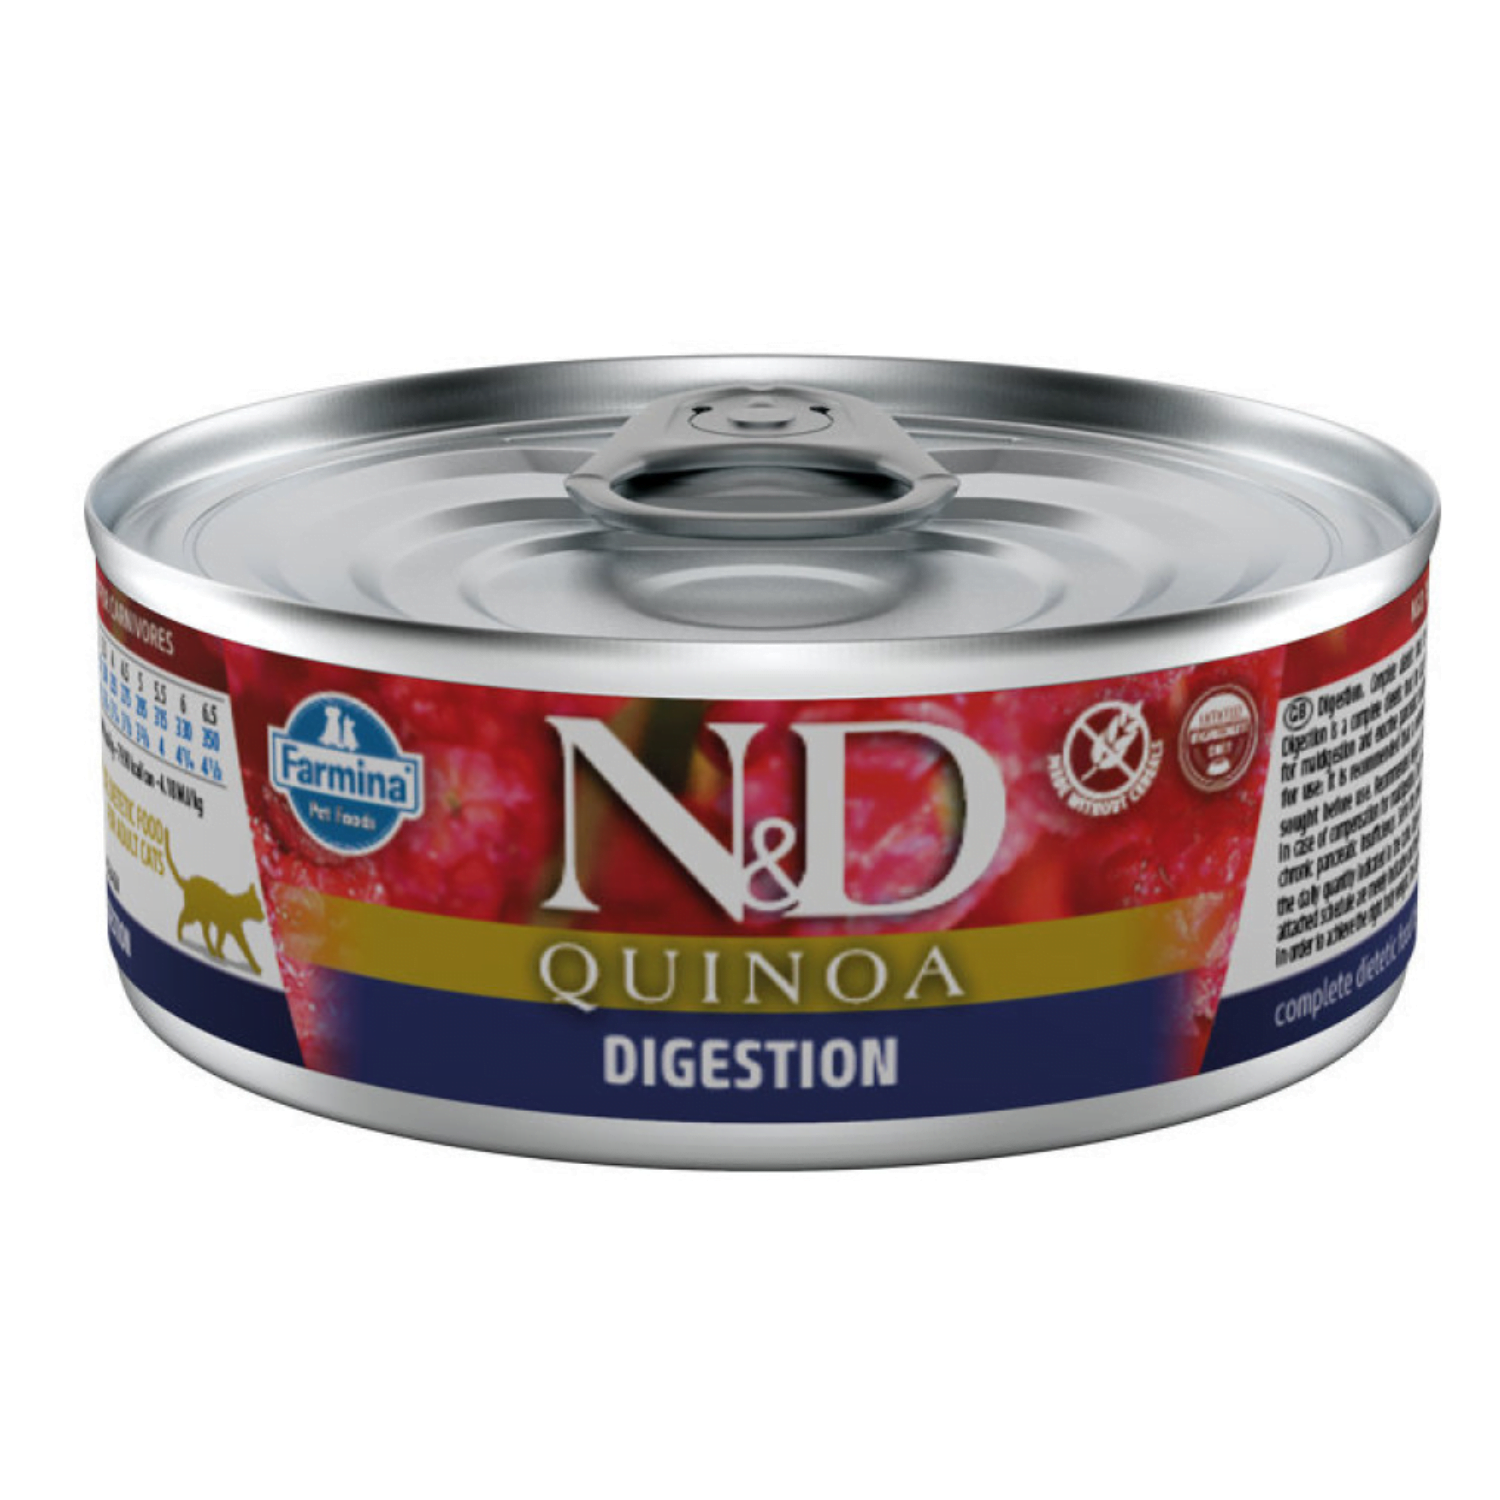 Farmina N&D Cat Quinoa Digestion 80g